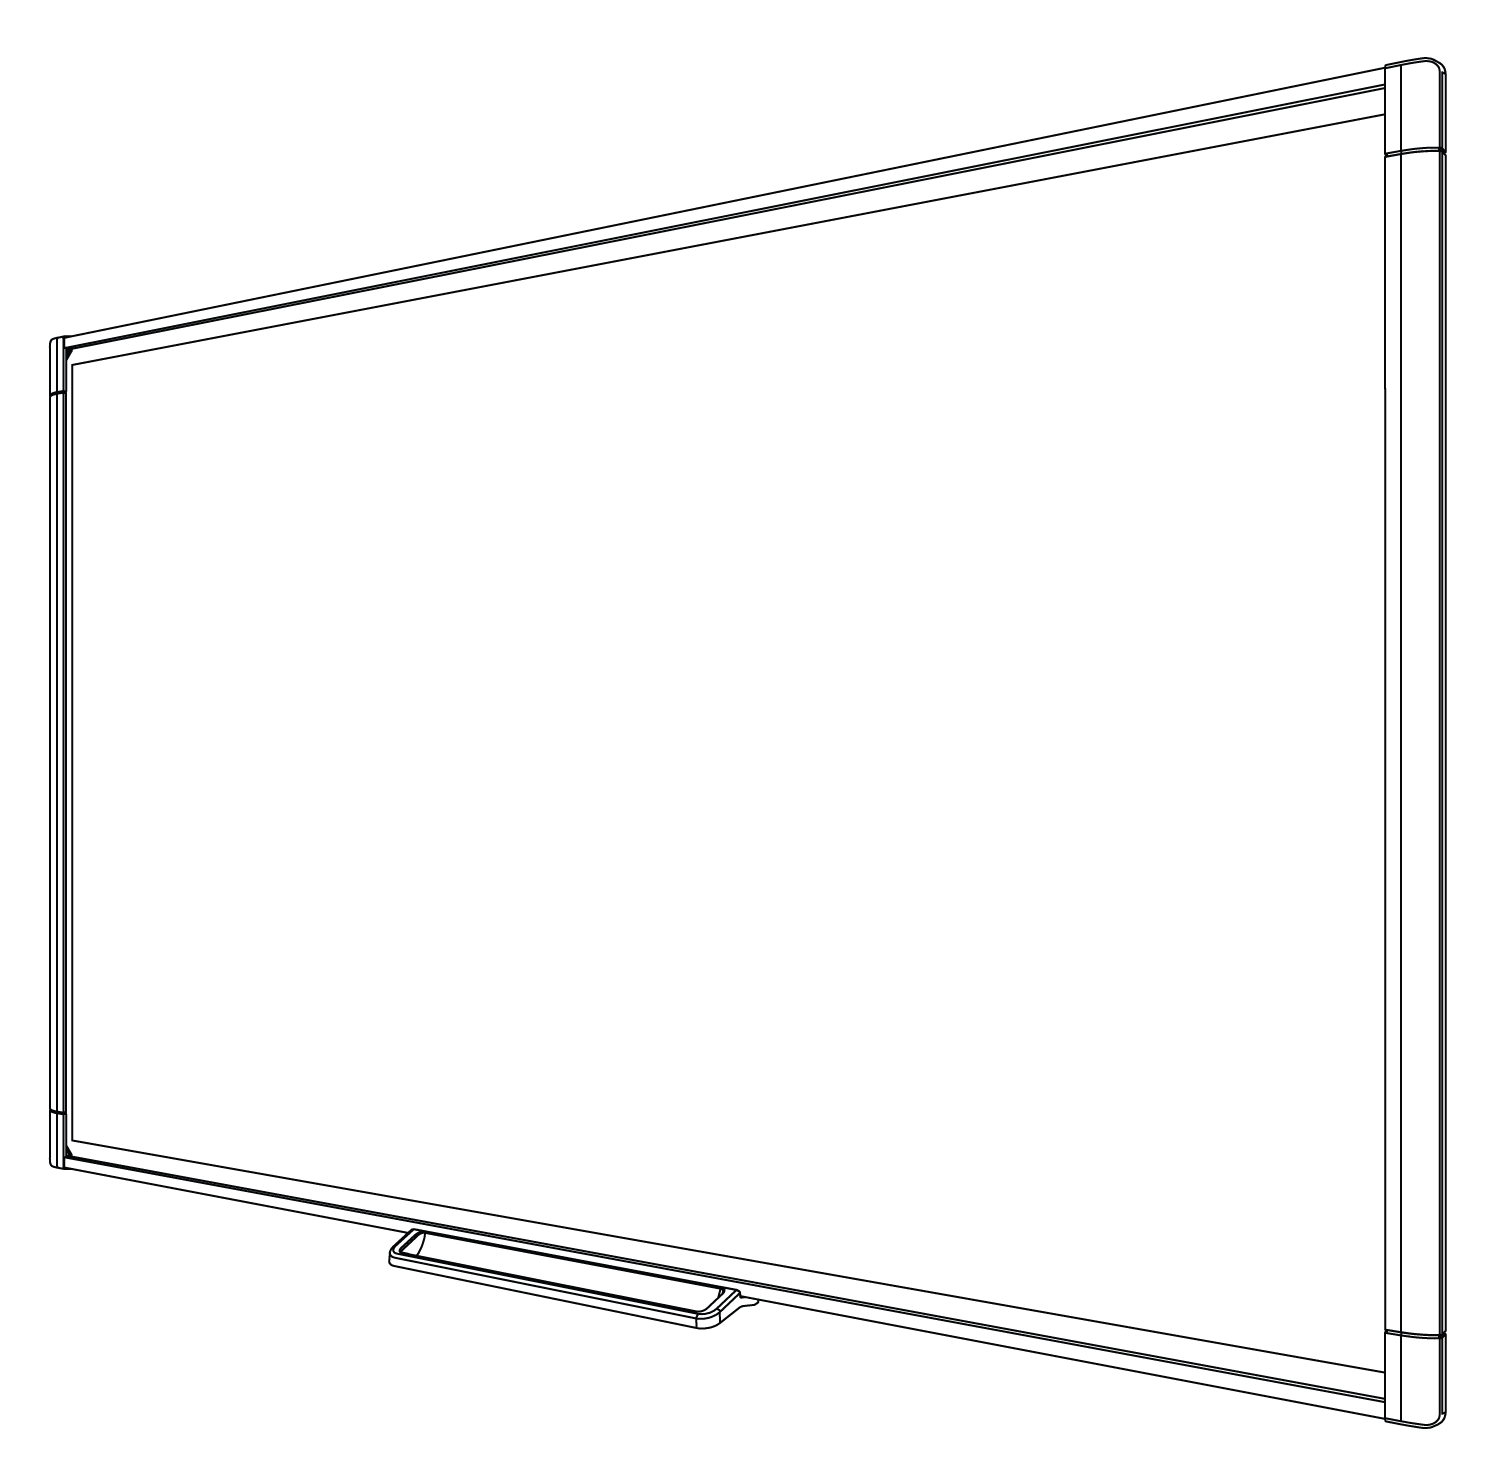 SMART Board 680V interactive whiteboard